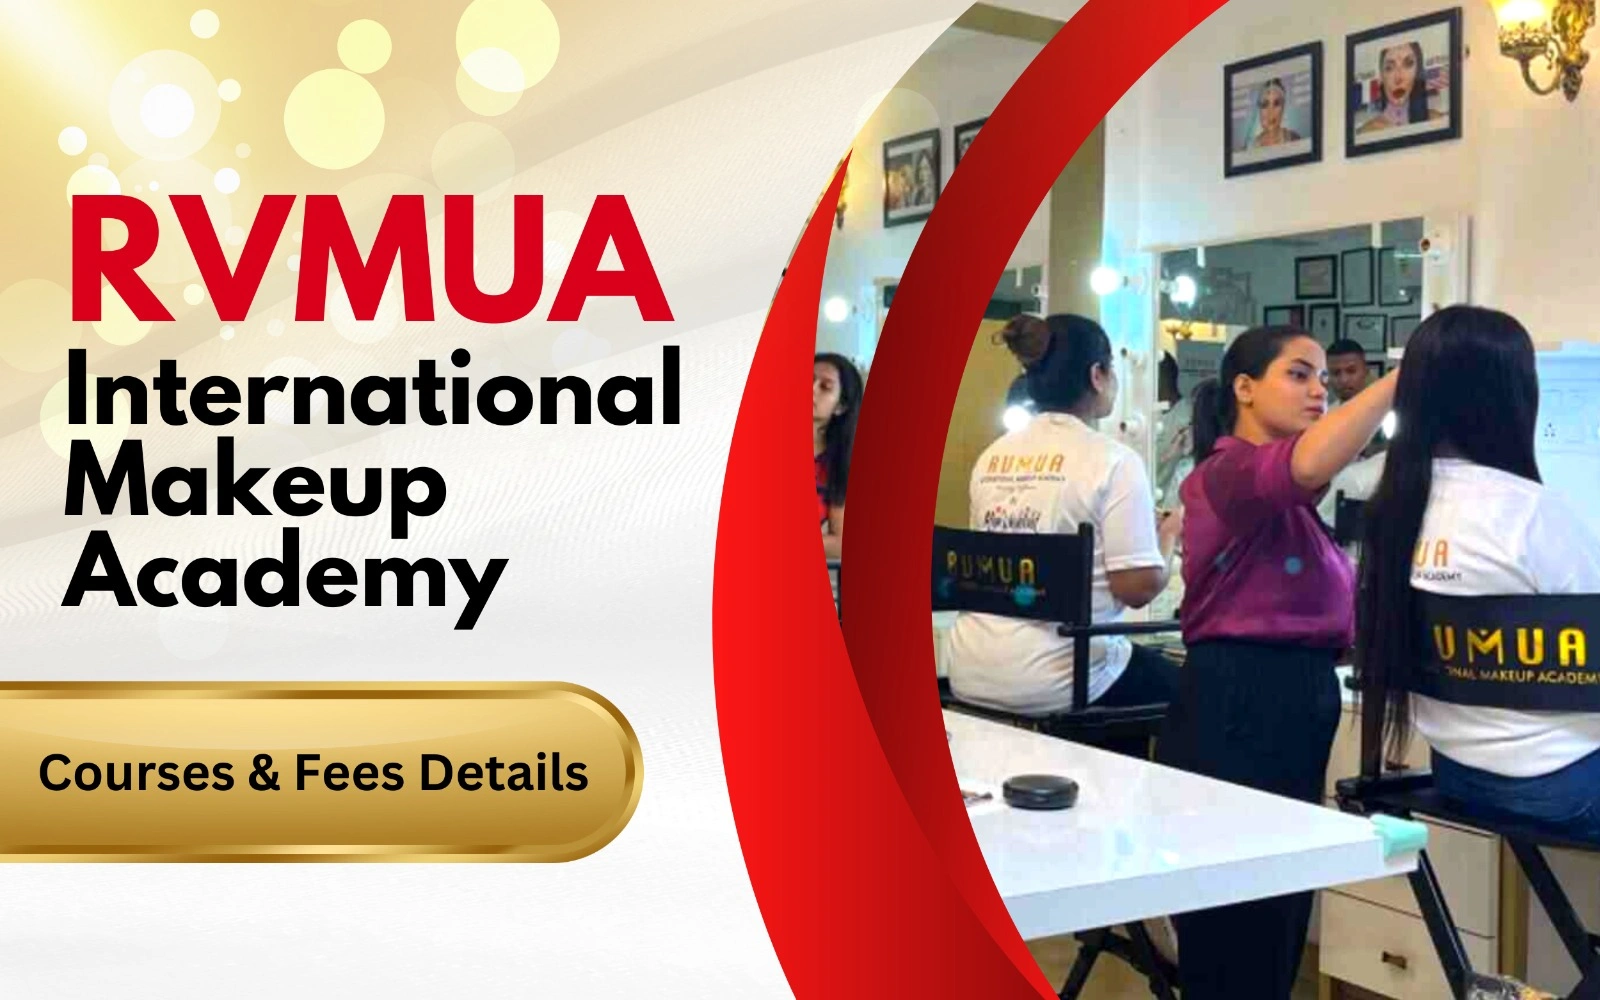 RVMUA International Makeup Academy: Courses & Fees Details